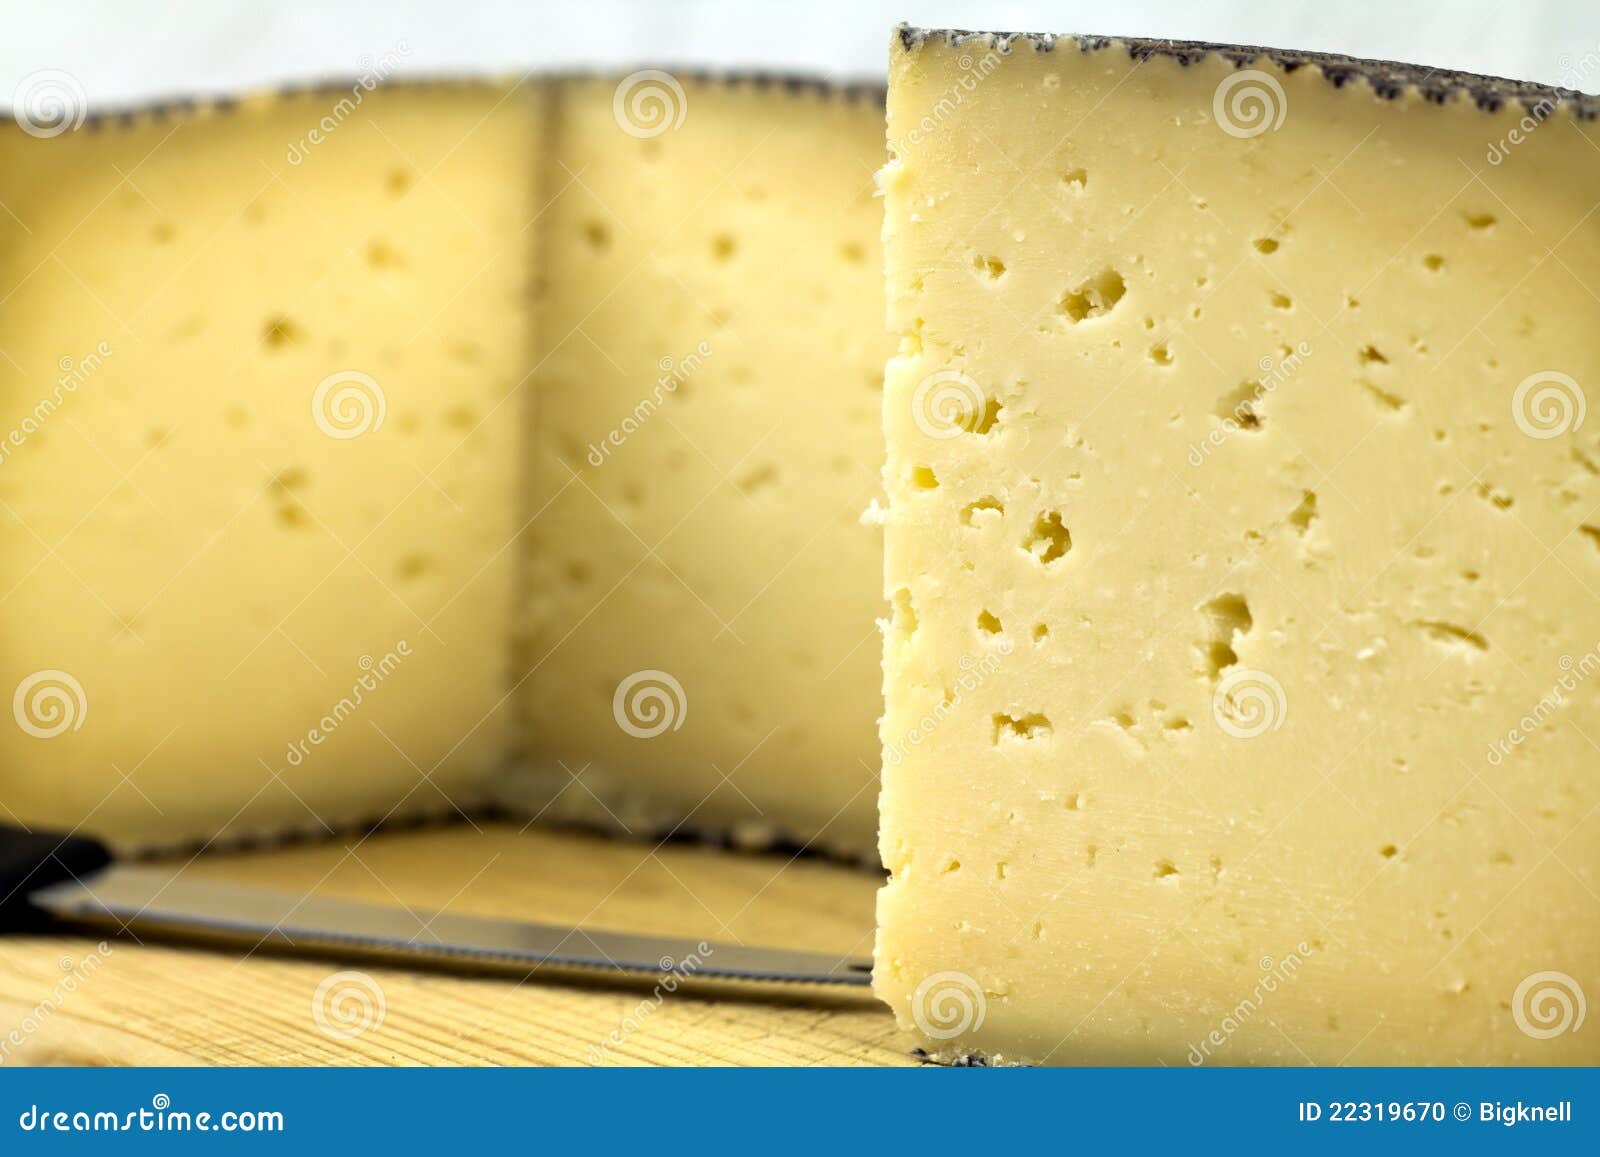 manchego cheese